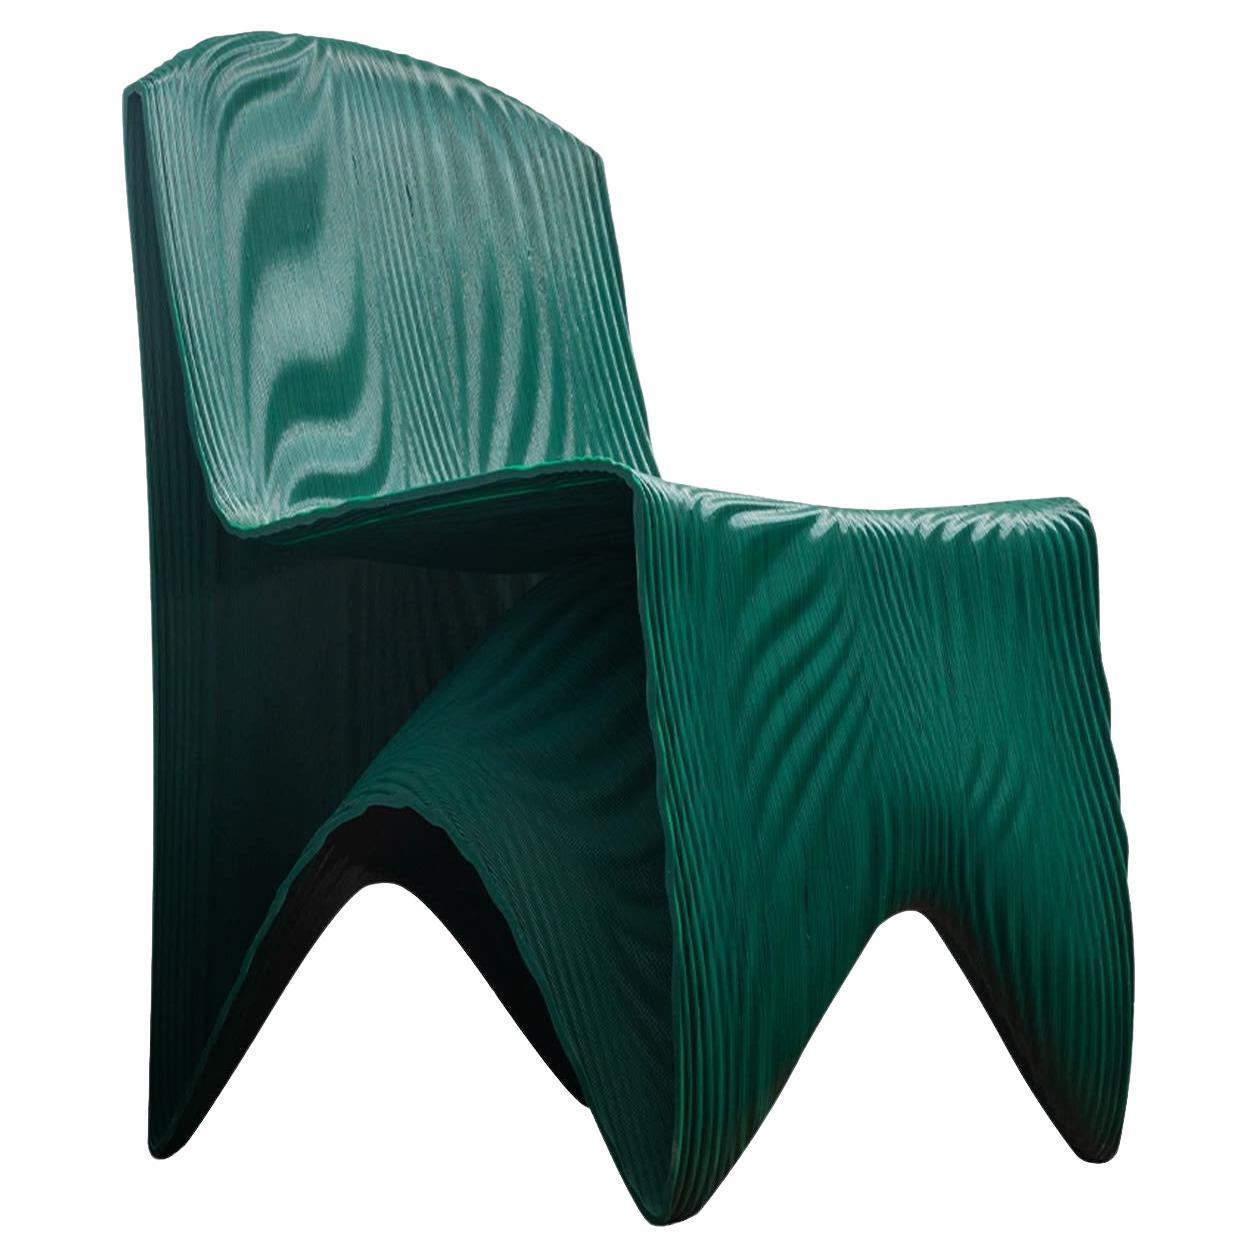 Santorini Green Chairs